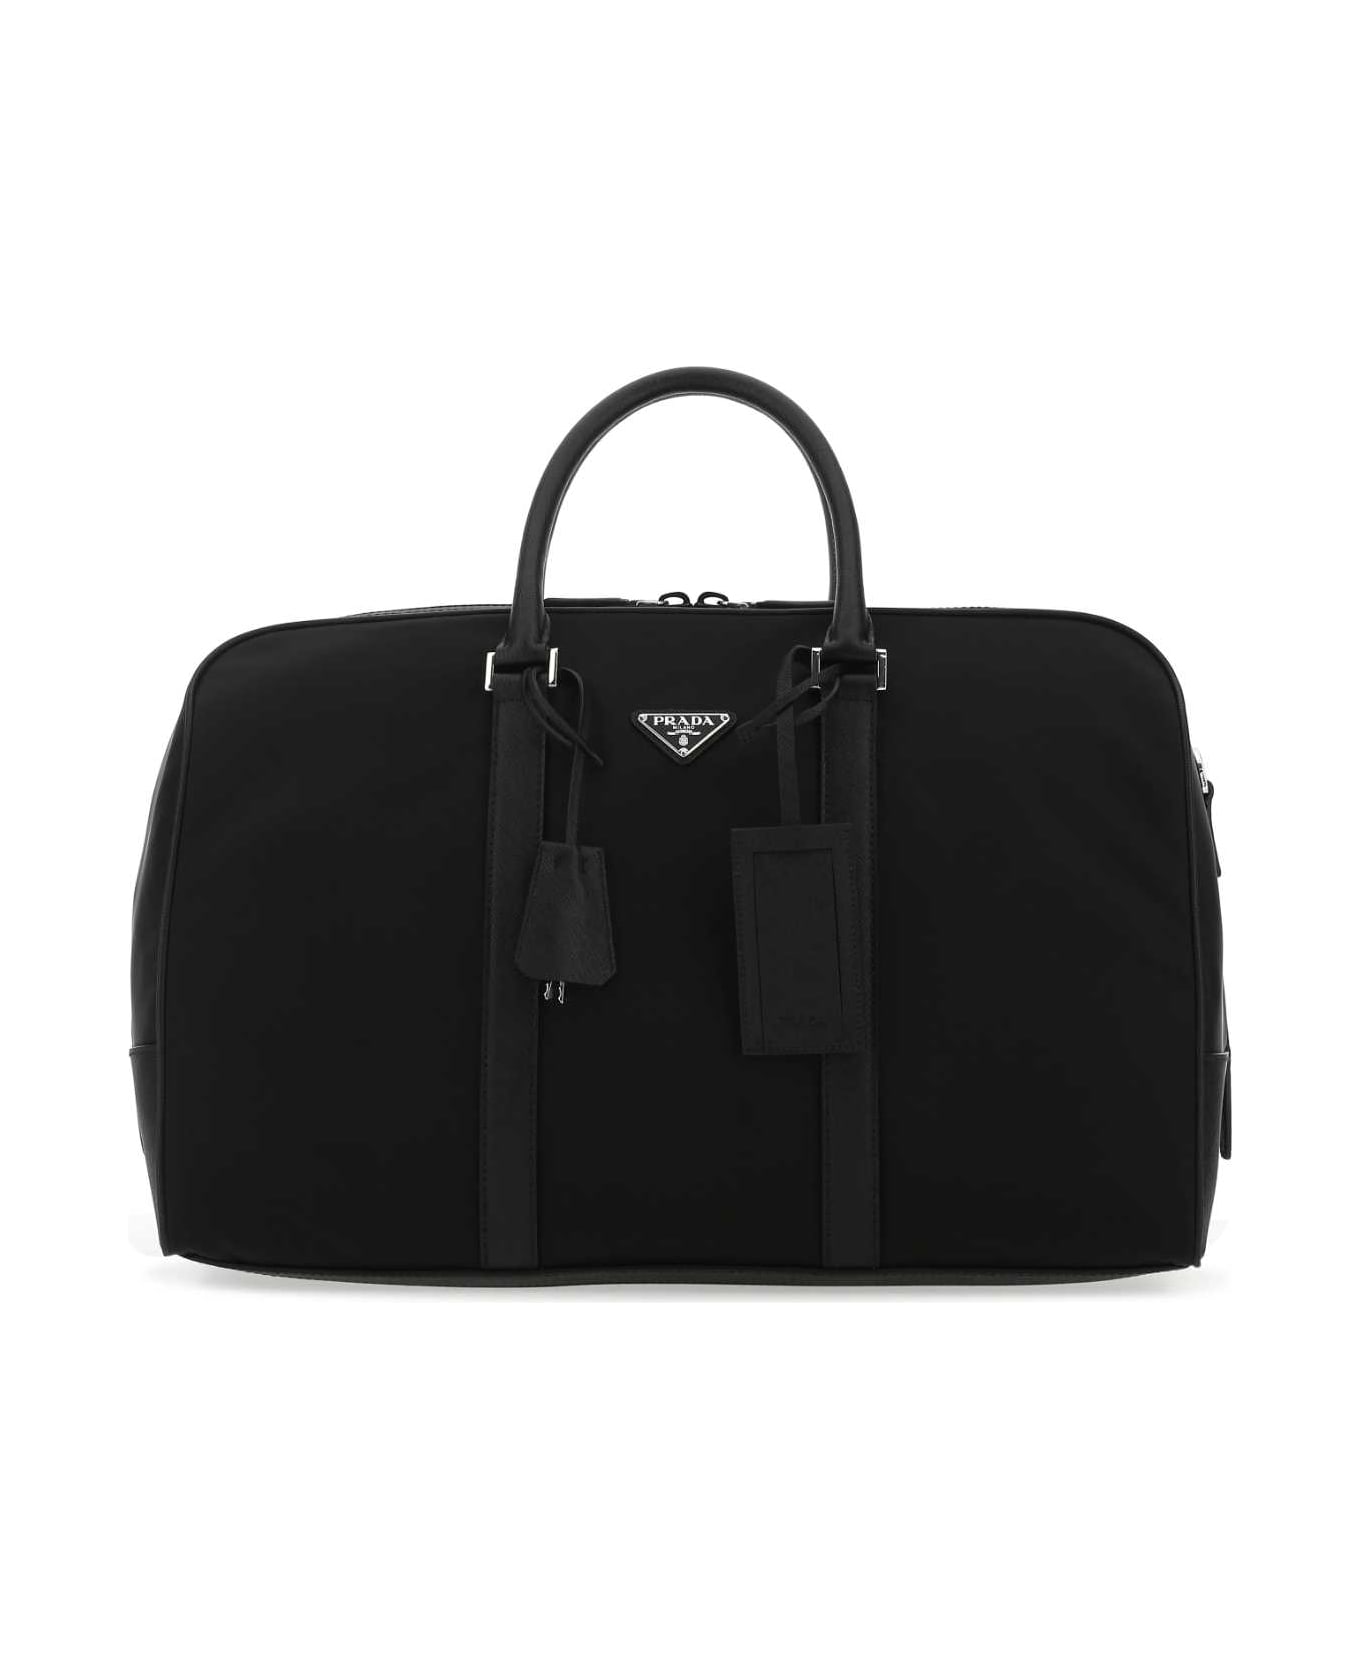 Prada Black Nylon Travel Bag - F0002 トラベルバッグ